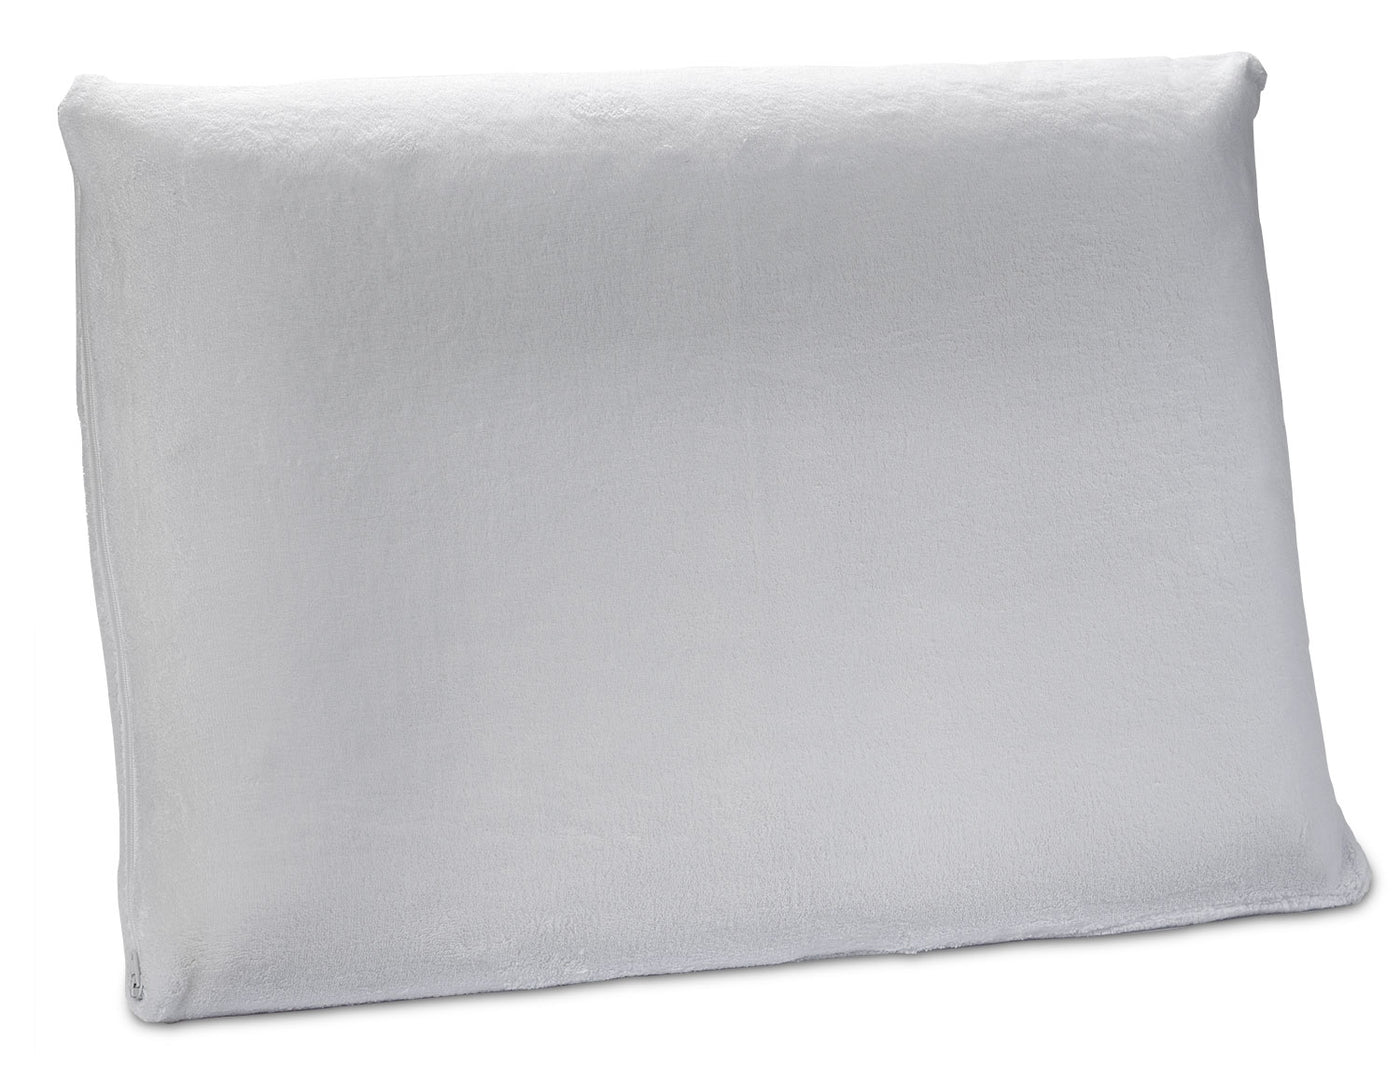 Ergo Utopia Standard Pillow